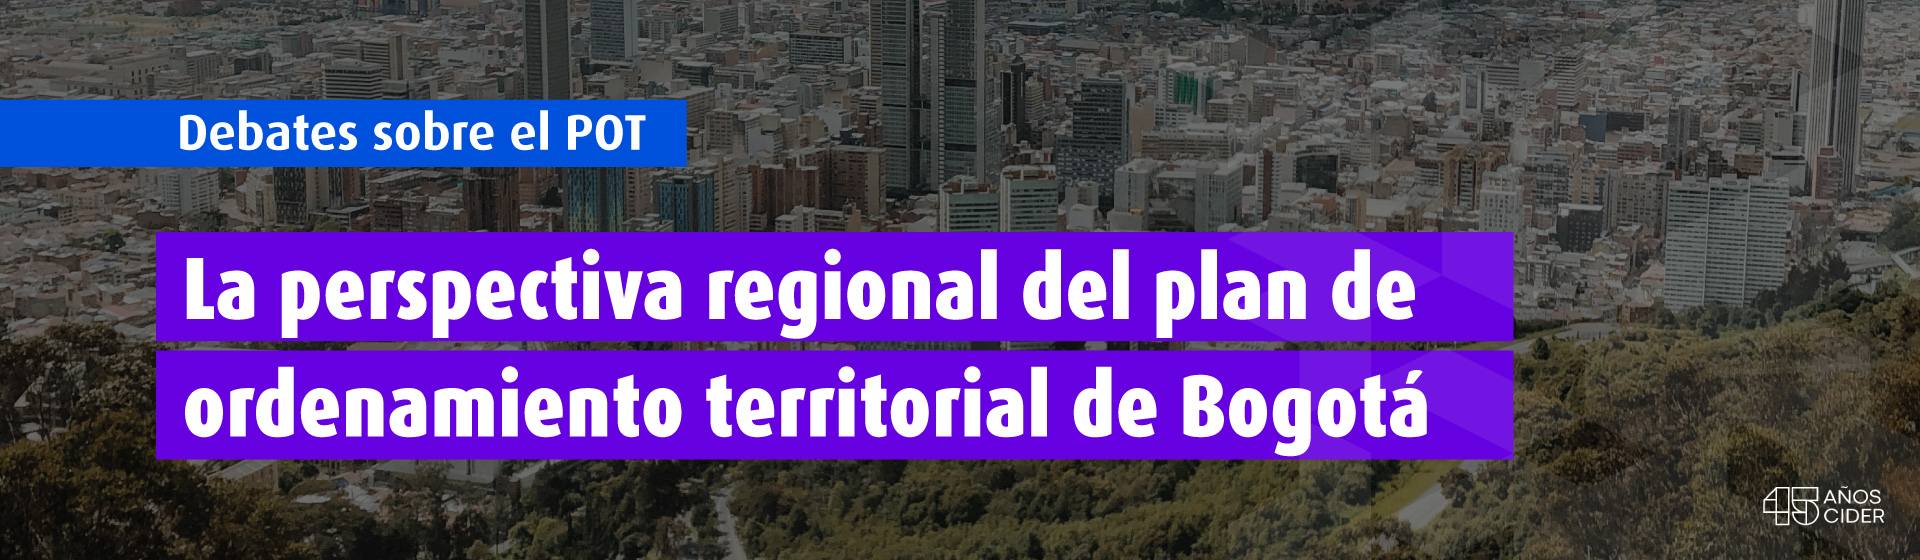 POT perspectiva regional Bogotá Cider | Uniandes 